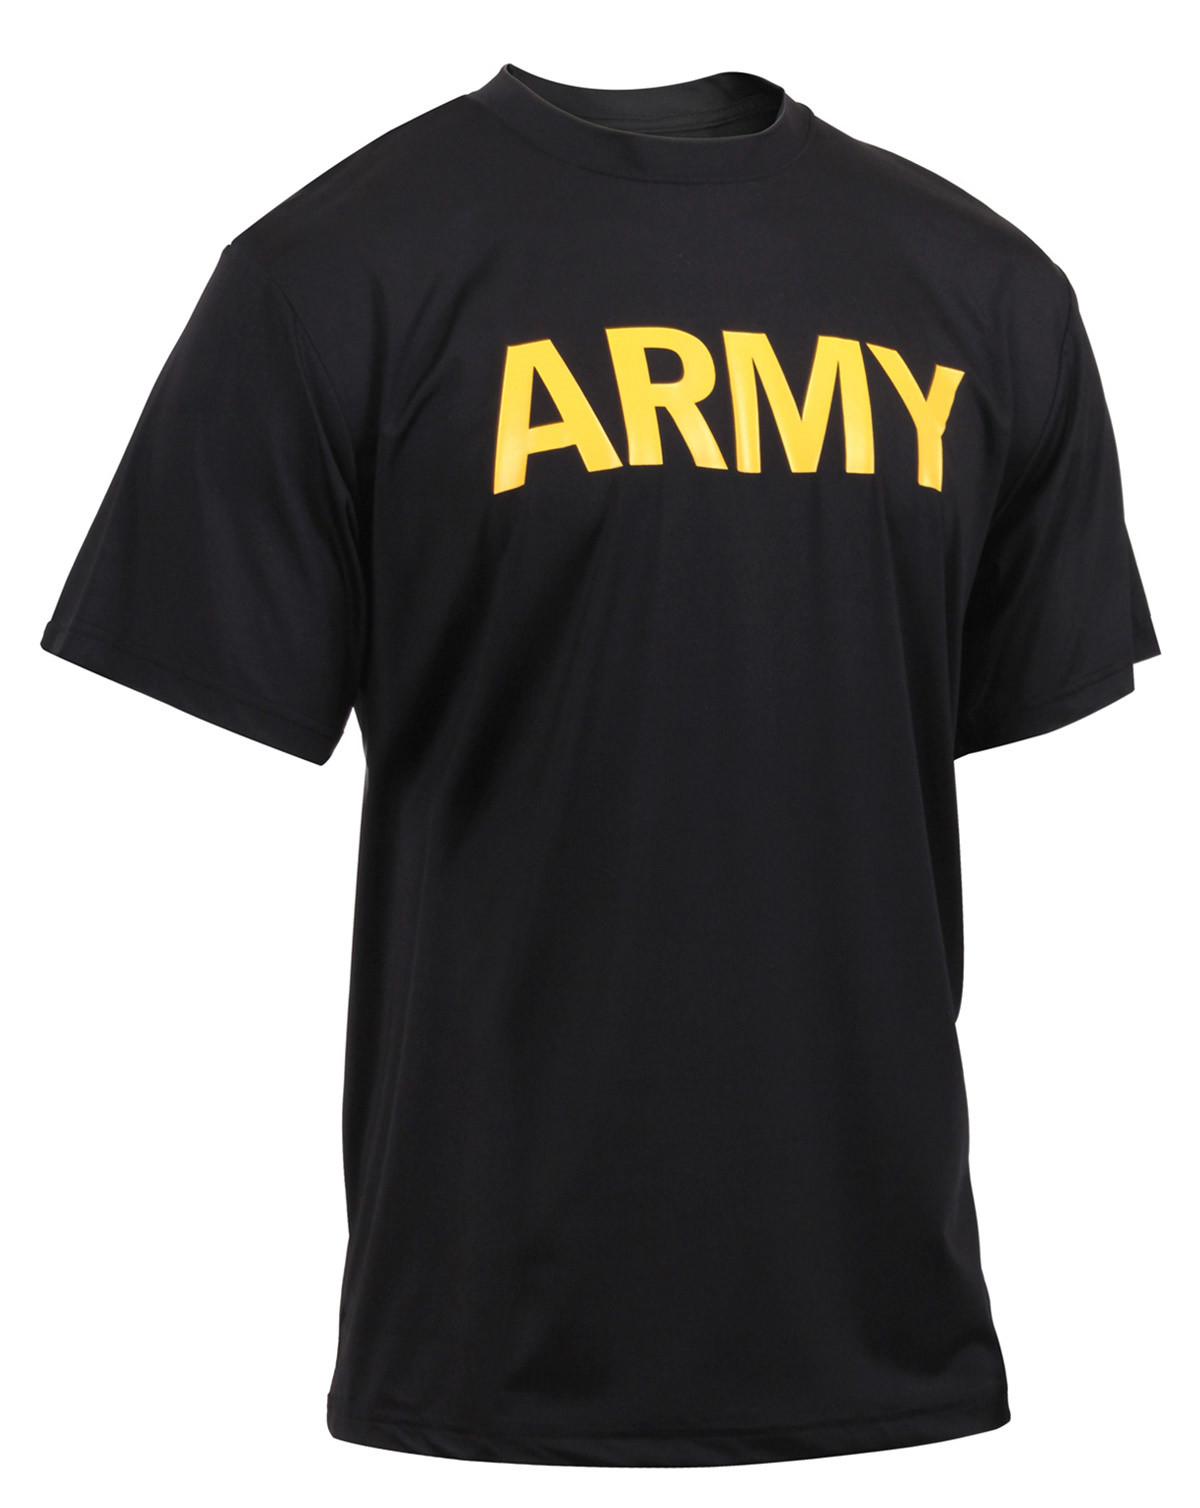 Rothco Army PT Trænings T-shirt (Sort, M)